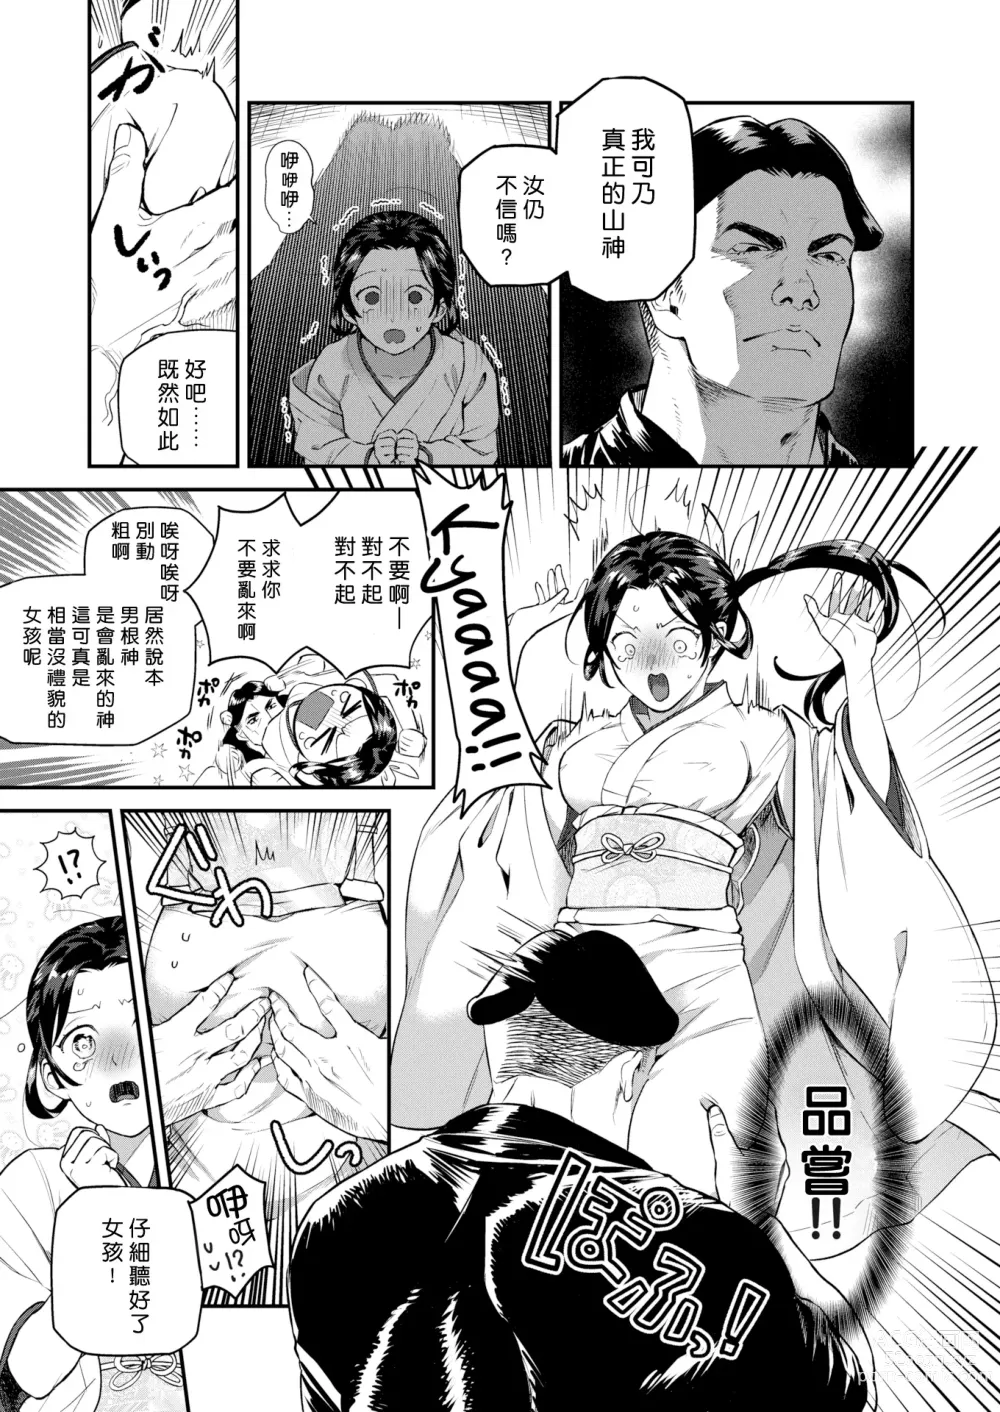 Page 7 of doujinshi 『雨乞い乙女』